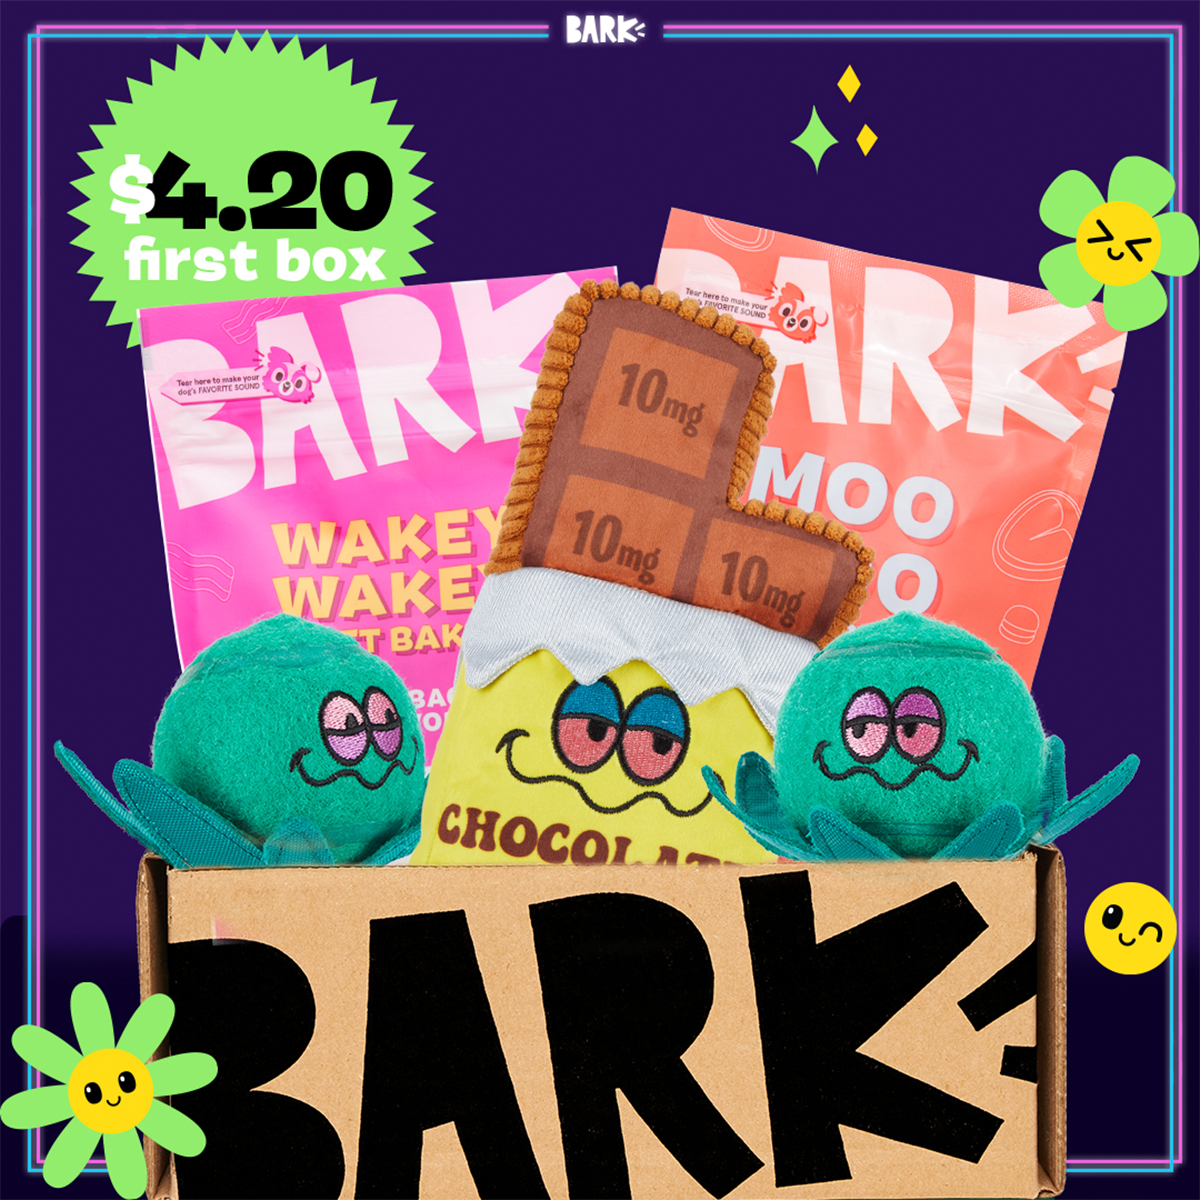 BarkBox 6 Month Subscription - $4.20 First Box